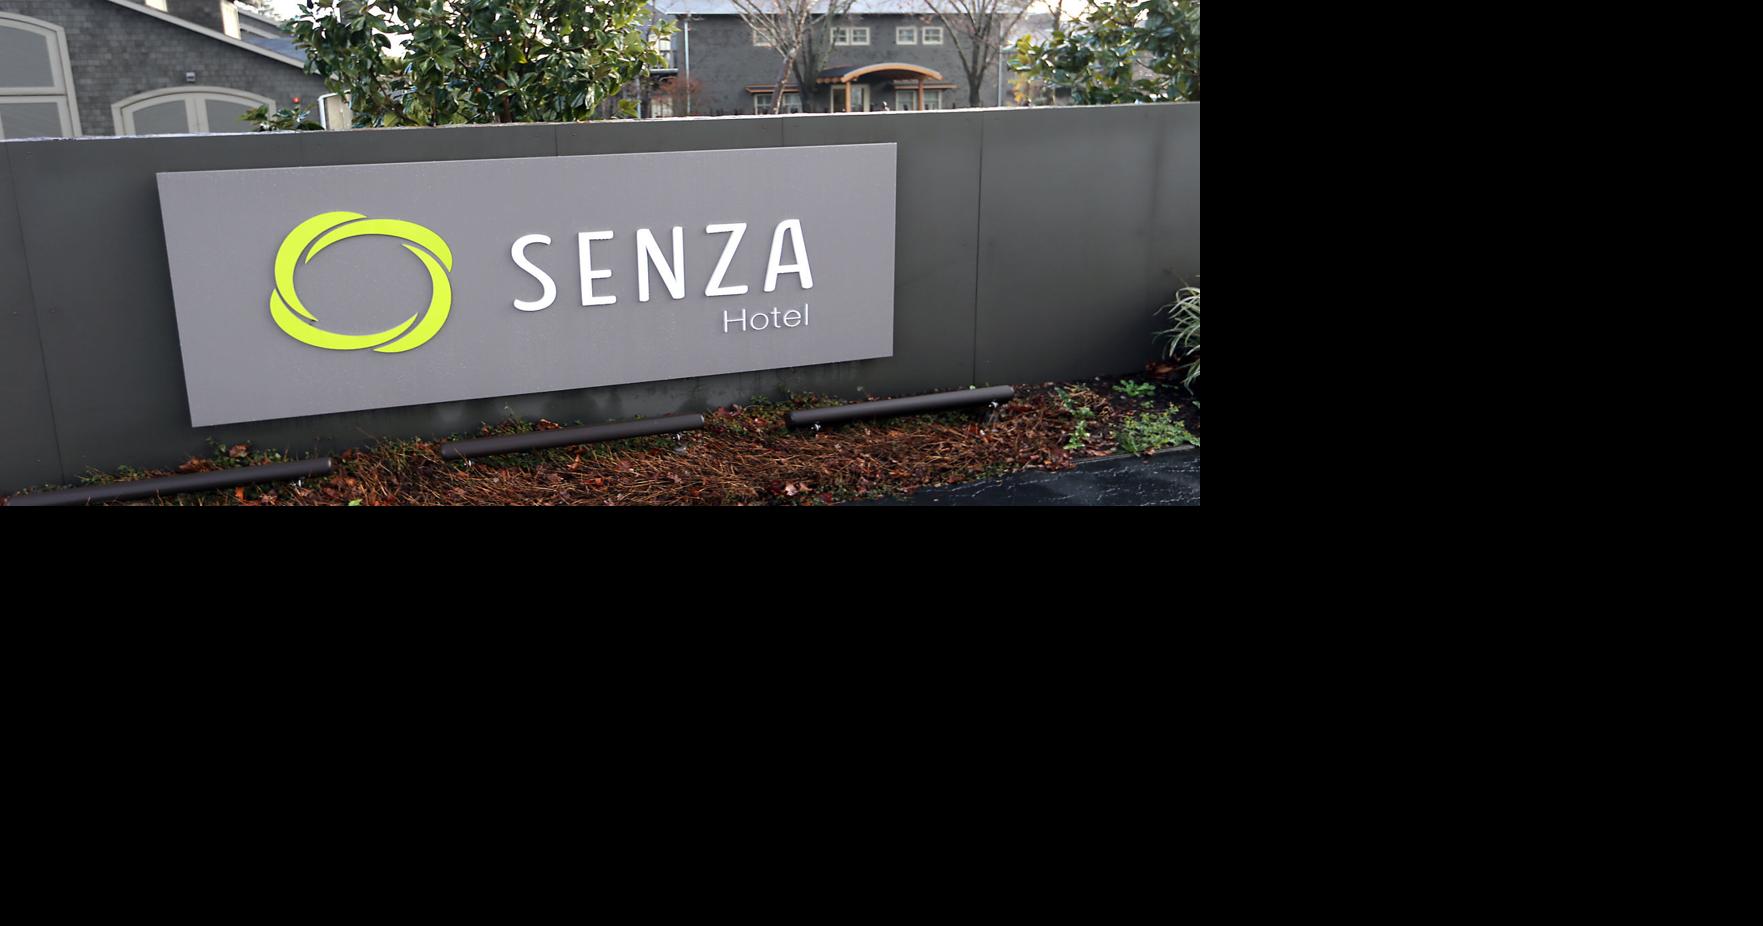 SENZA hotel plans addition in north Napa